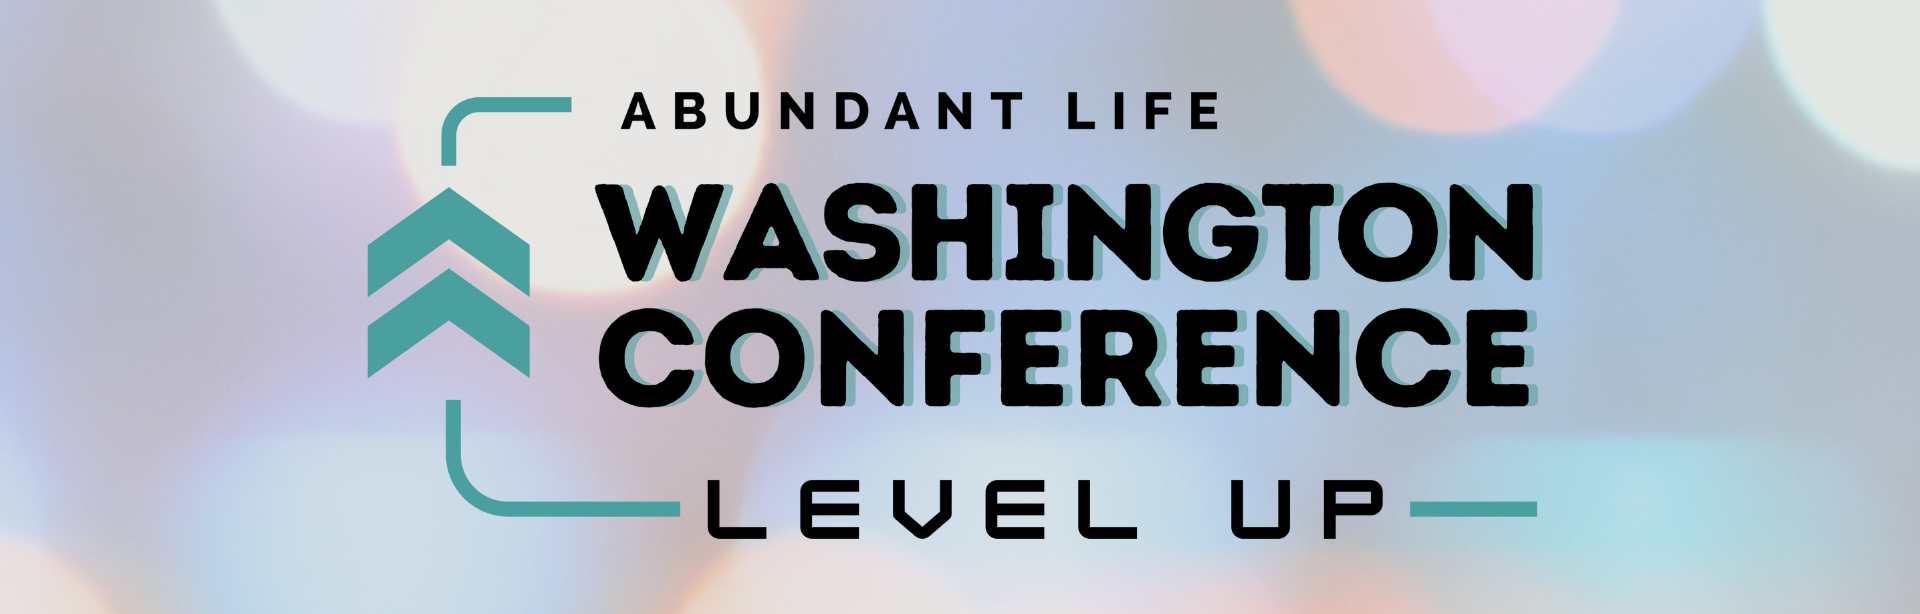 Abundant Life Conference